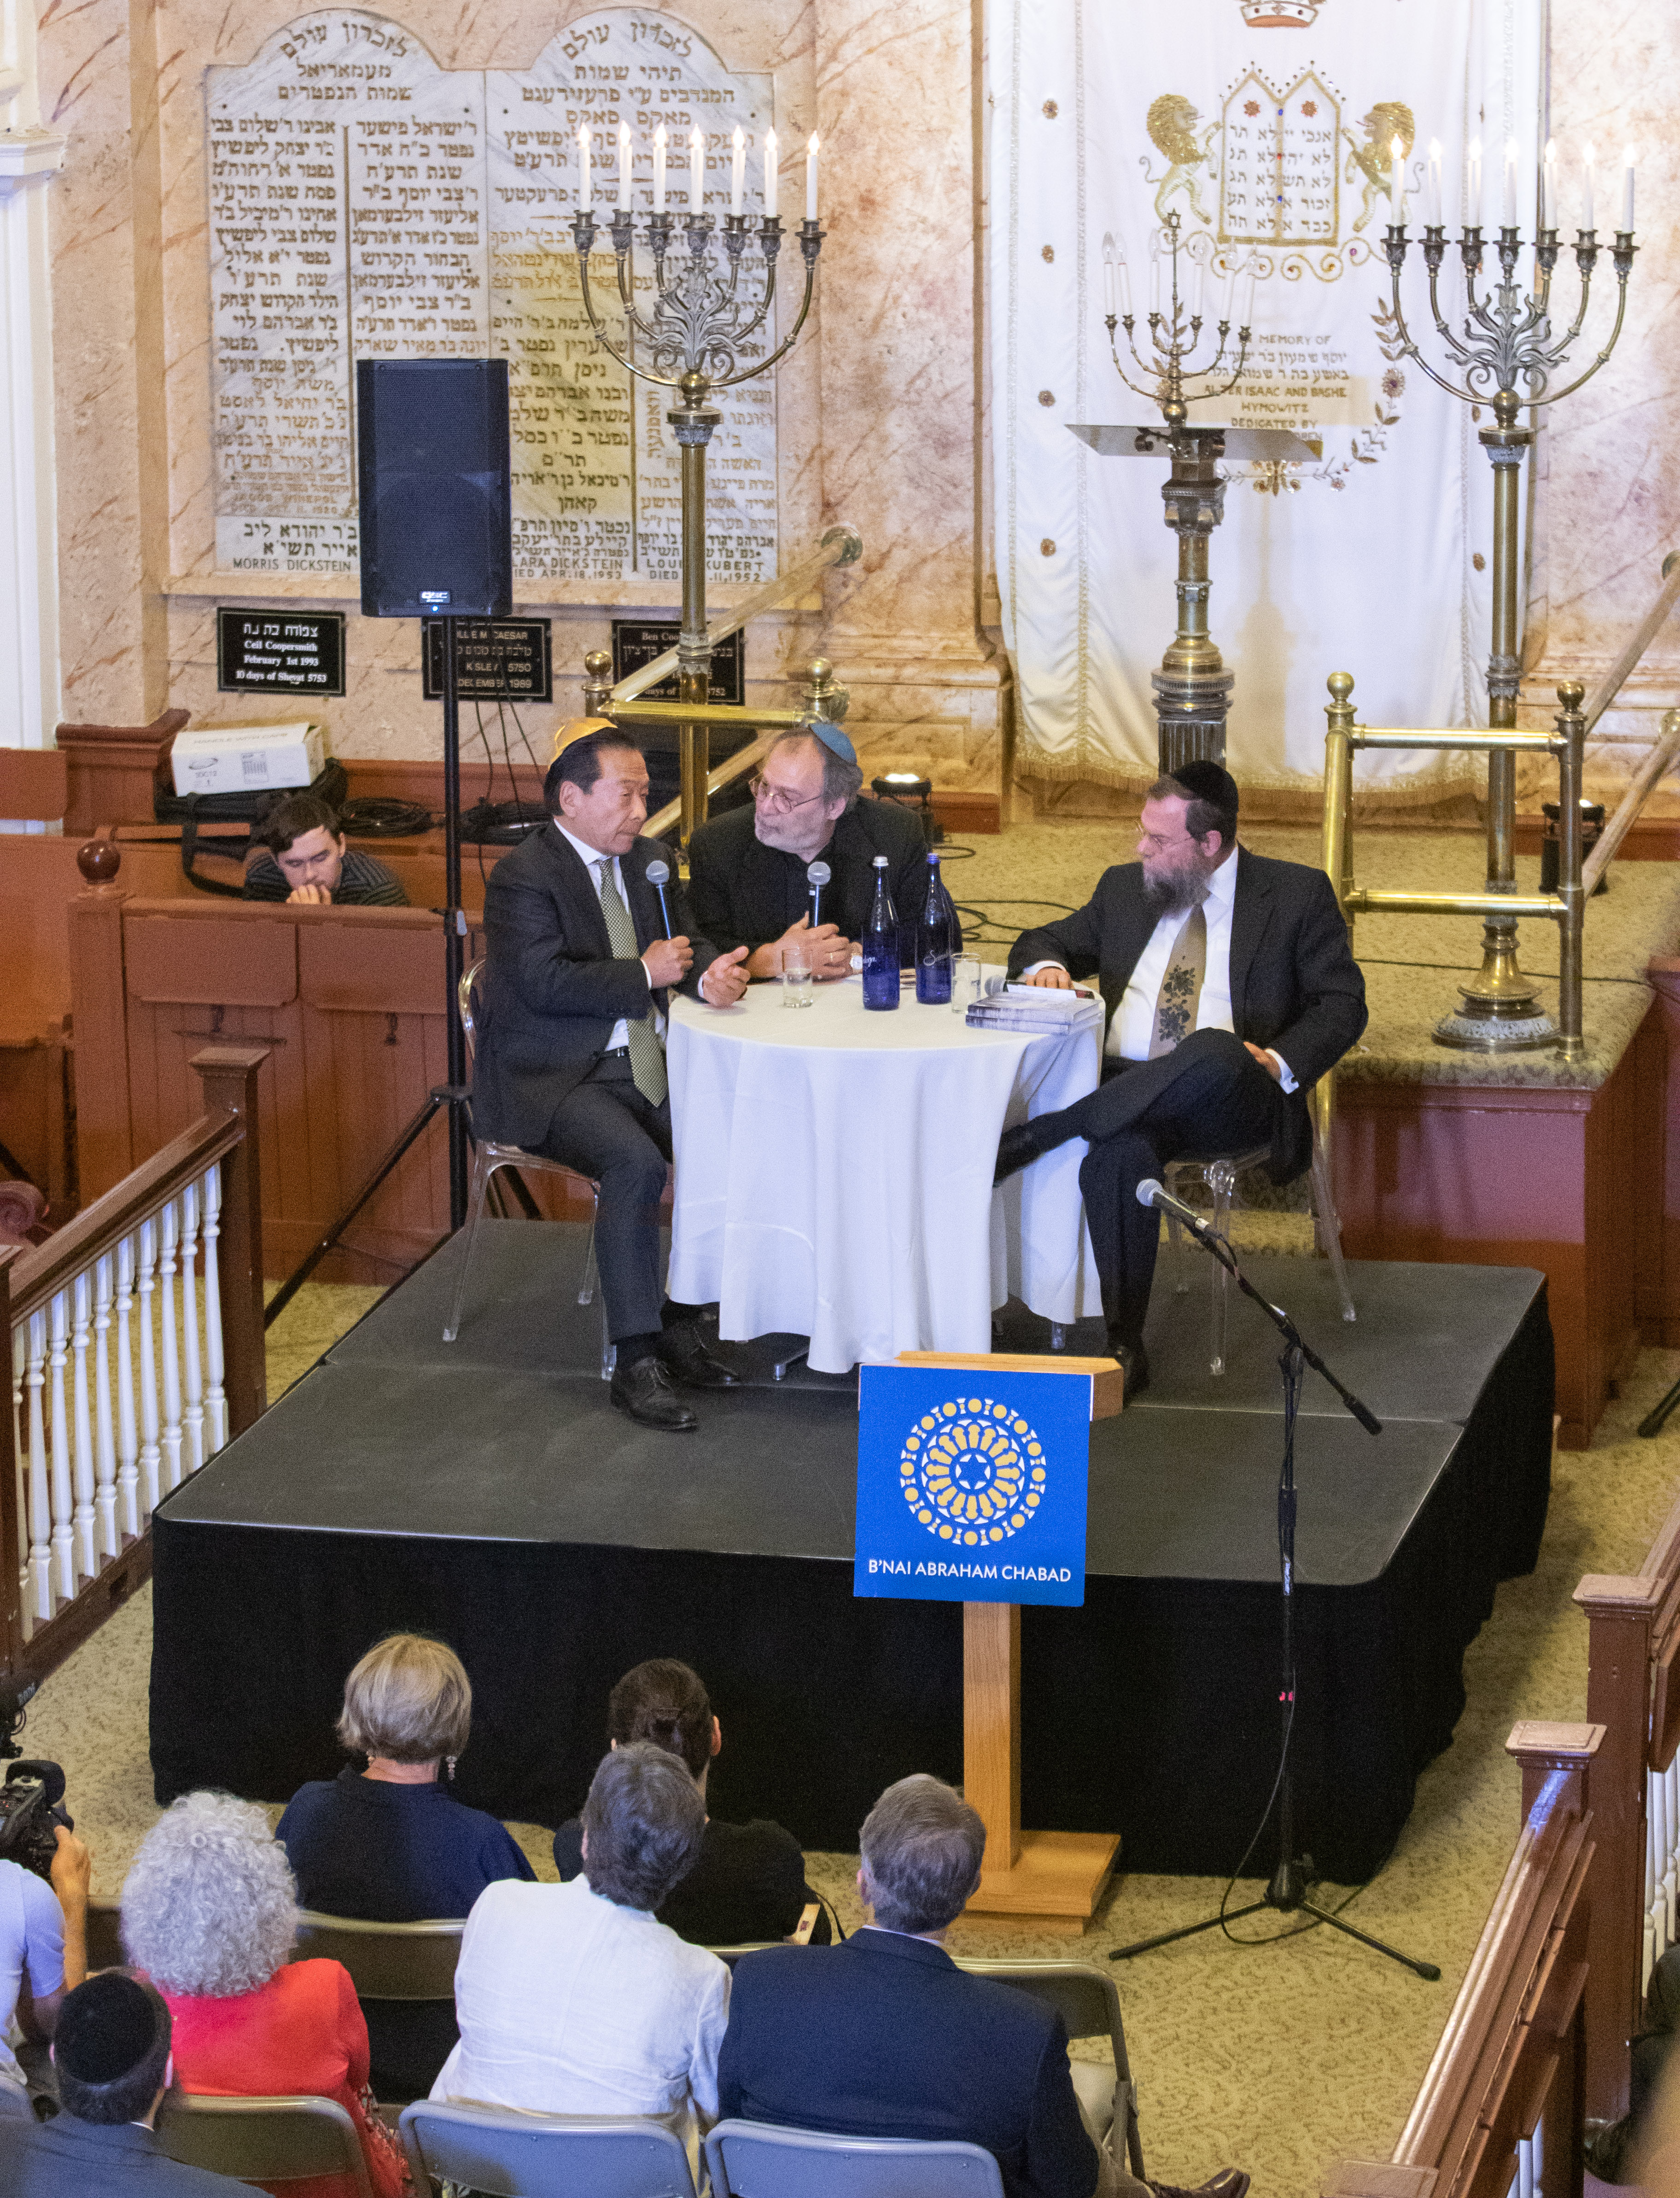 MAY 19, 2019 - PHILADELPHIA, PA -- B'nai Abraham Chabad's Tribute Event and Award Ceremony: From Kovno to Kobe, Sunday, May 19, 2019.  PHOTOS © 2019 Jay Gorodetzer -- Jay Gorodetzer Photography, www.JayGorodetzer.com